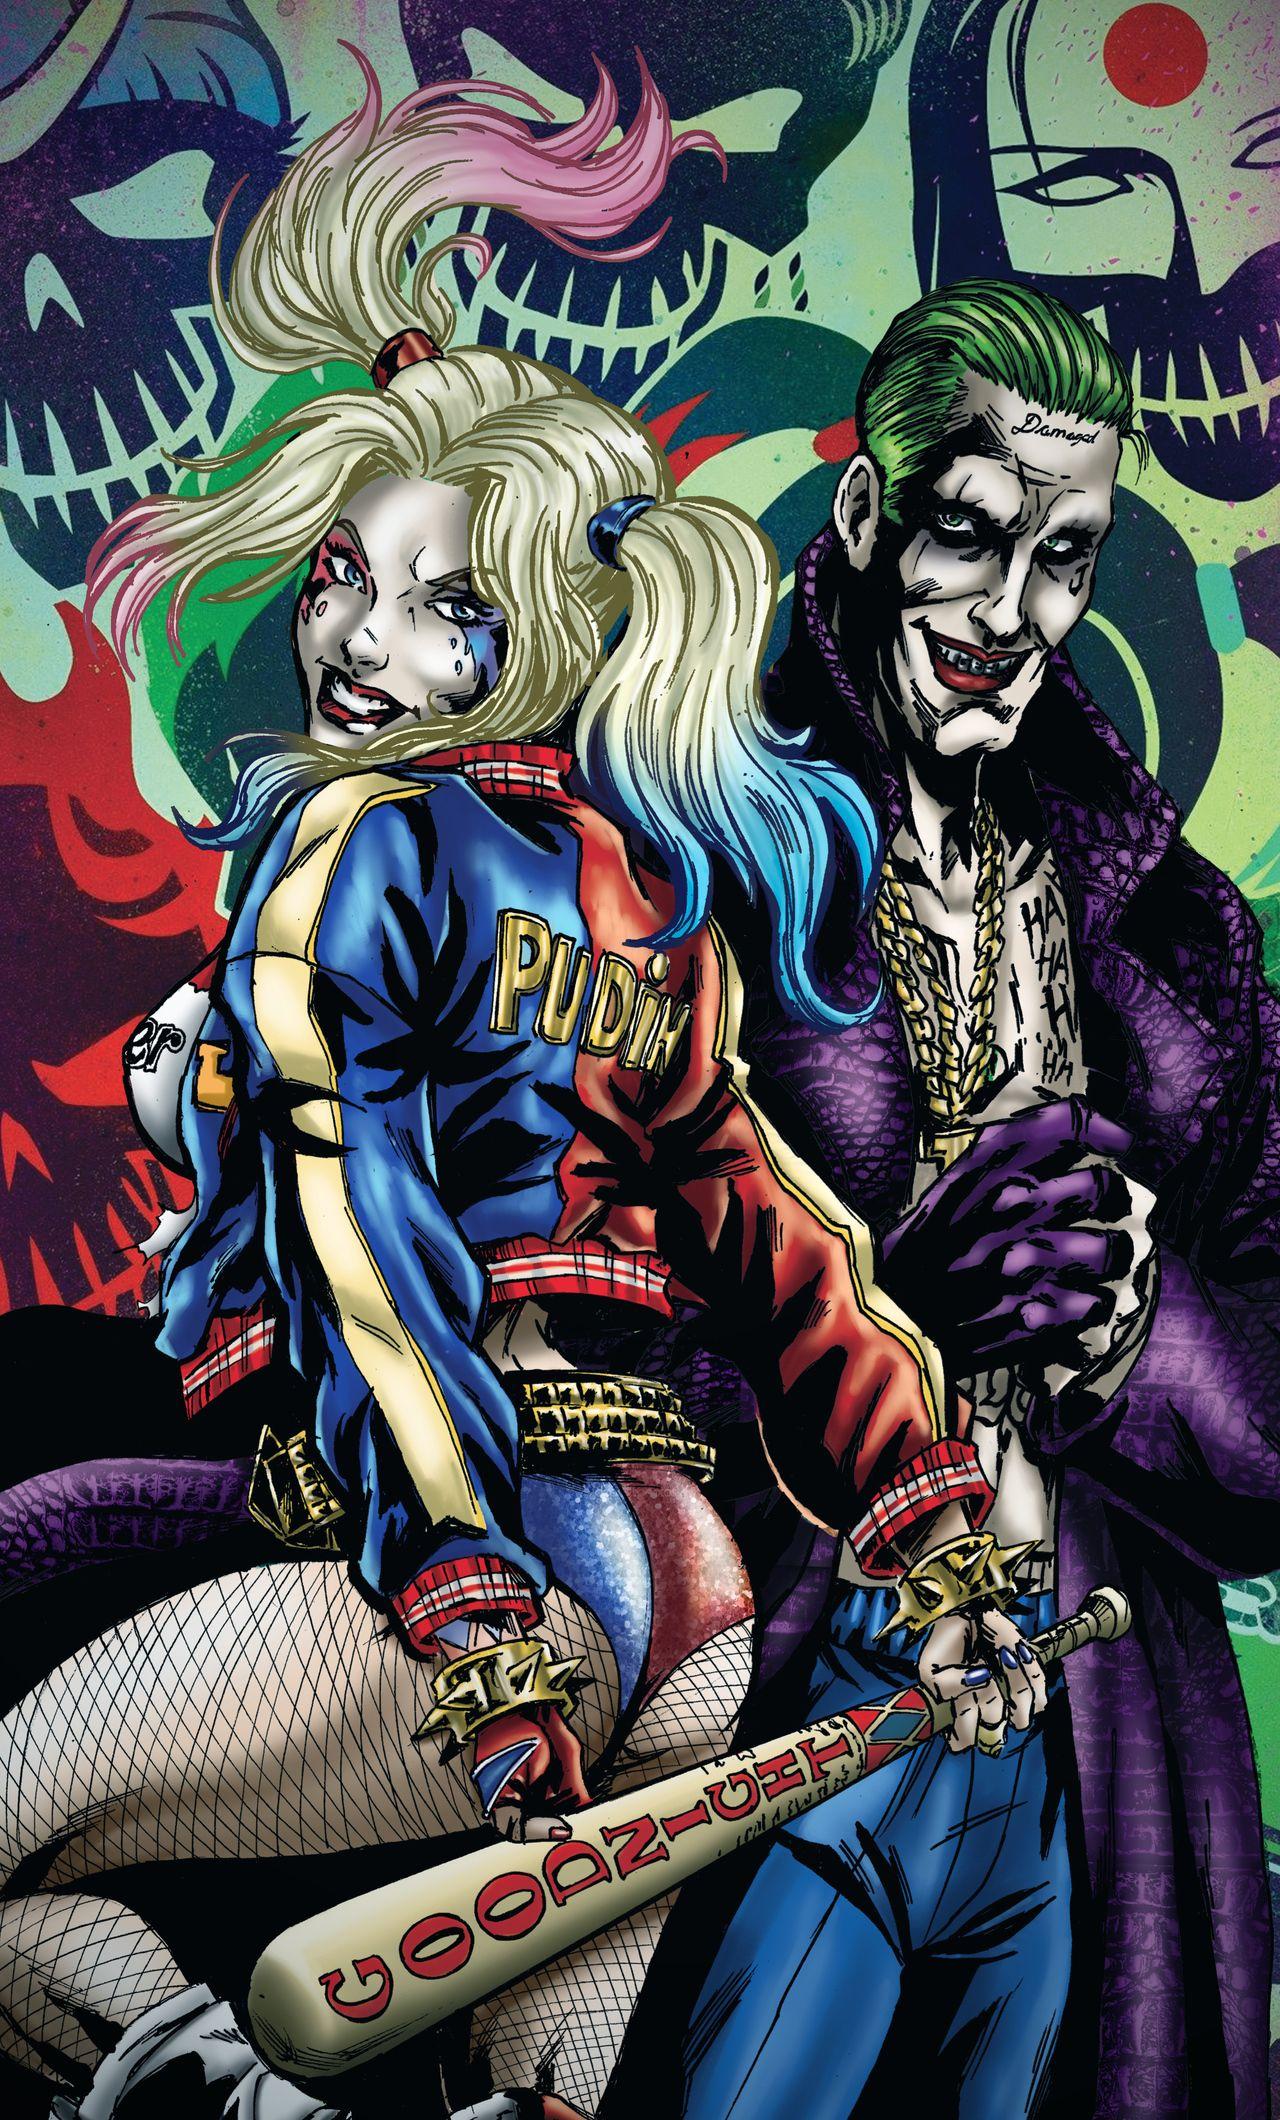 Anime Harley Quinn and Joker Wallpapers - Top Free Anime Harley Quinn